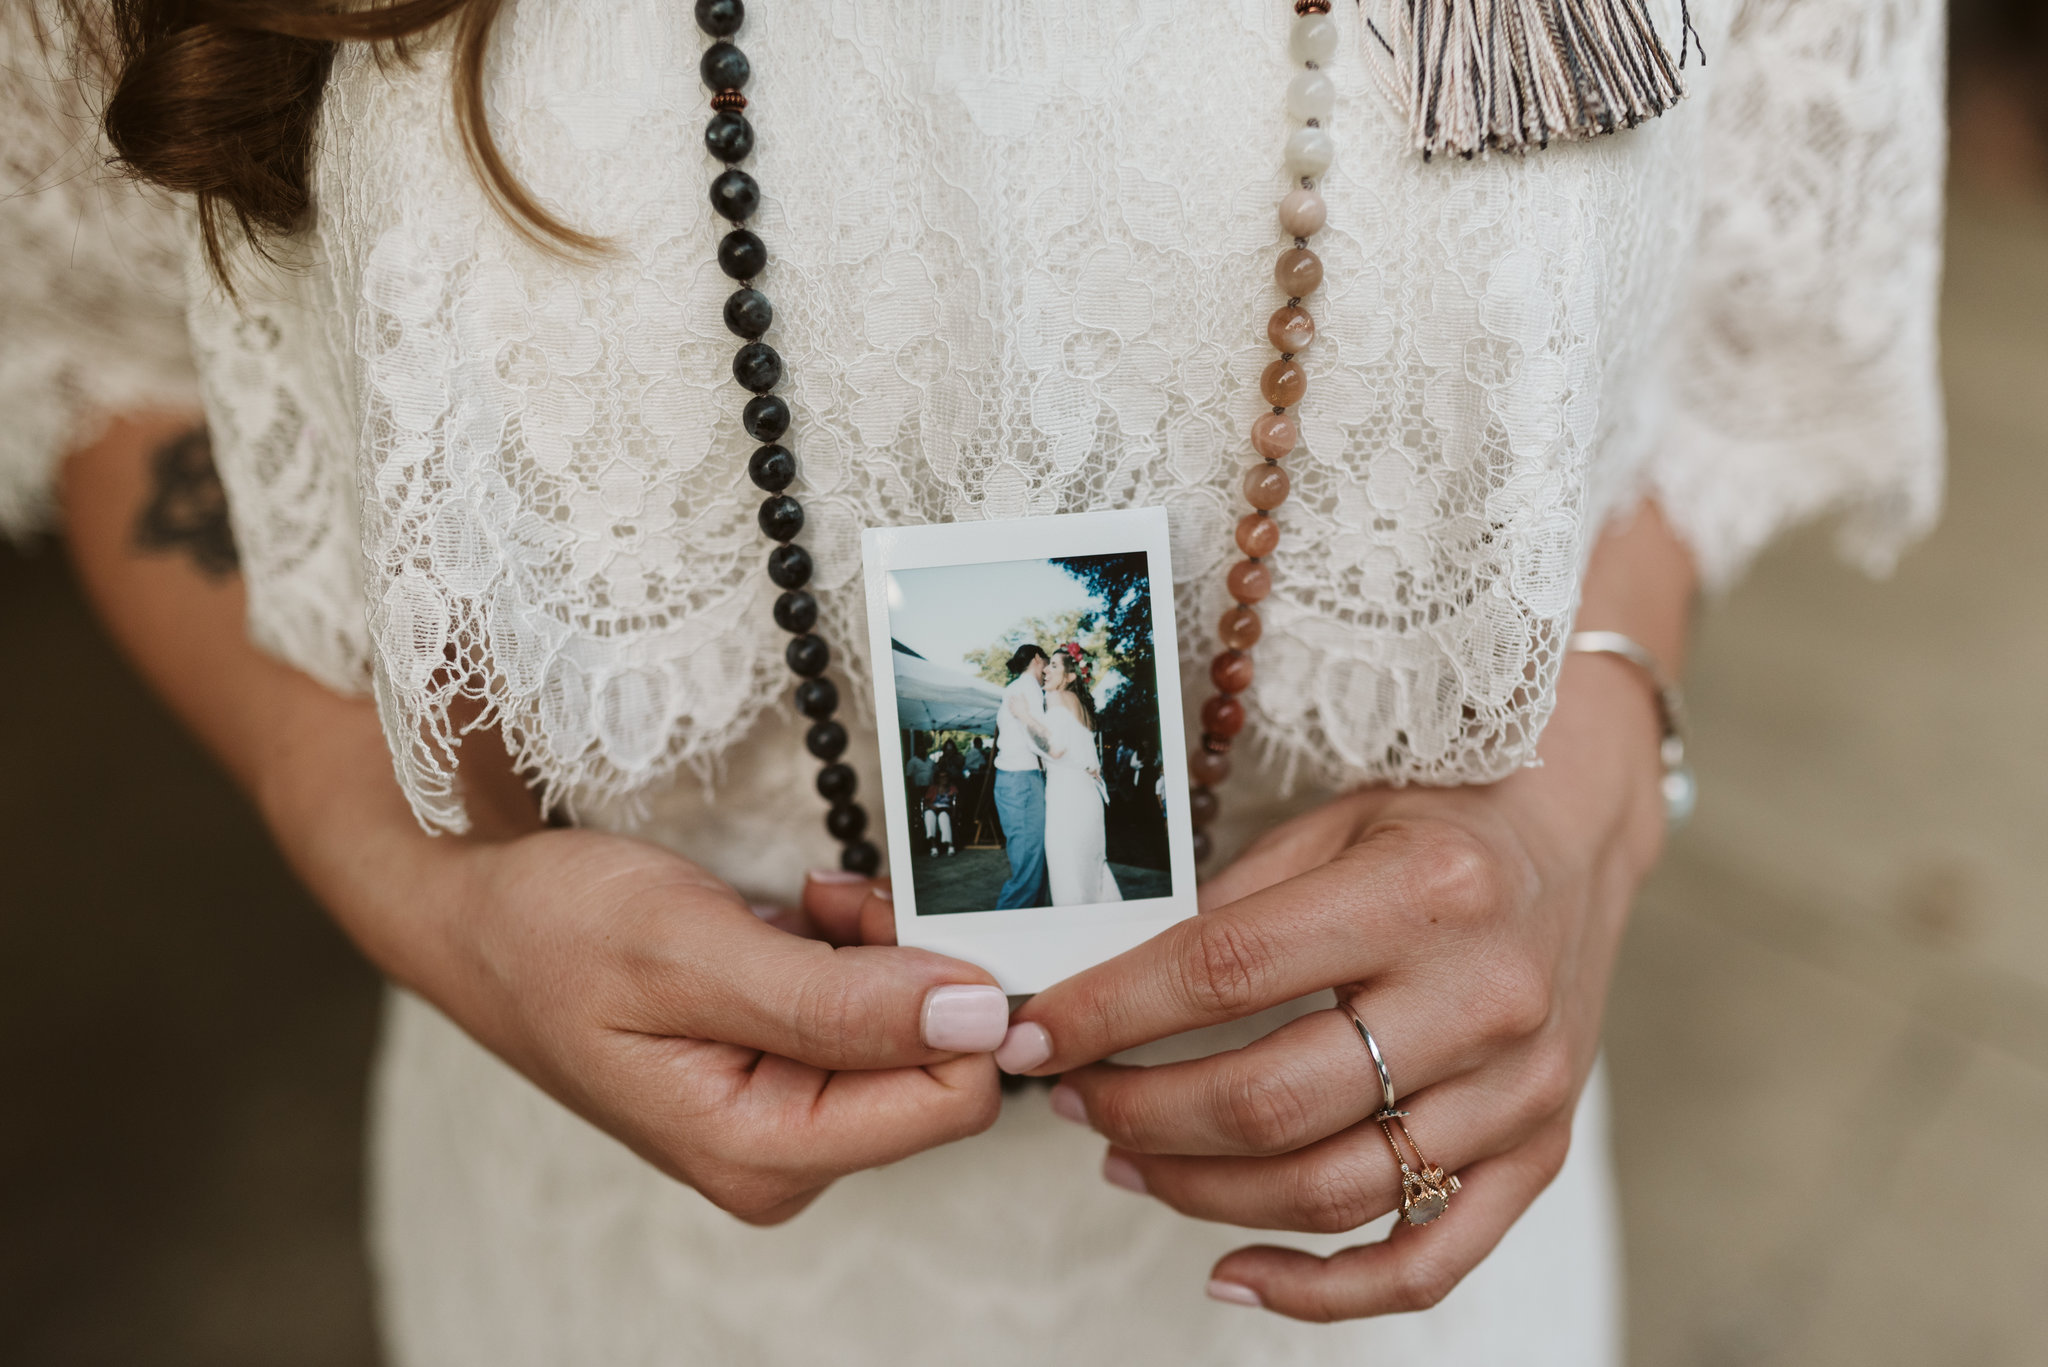  Annapolis, Quaker Wedding, Maryland Wedding Photographer, Intimate, Small Wedding, Vintage, DIY, Bride Holding Polaroid, First Dance, Sweet photo 